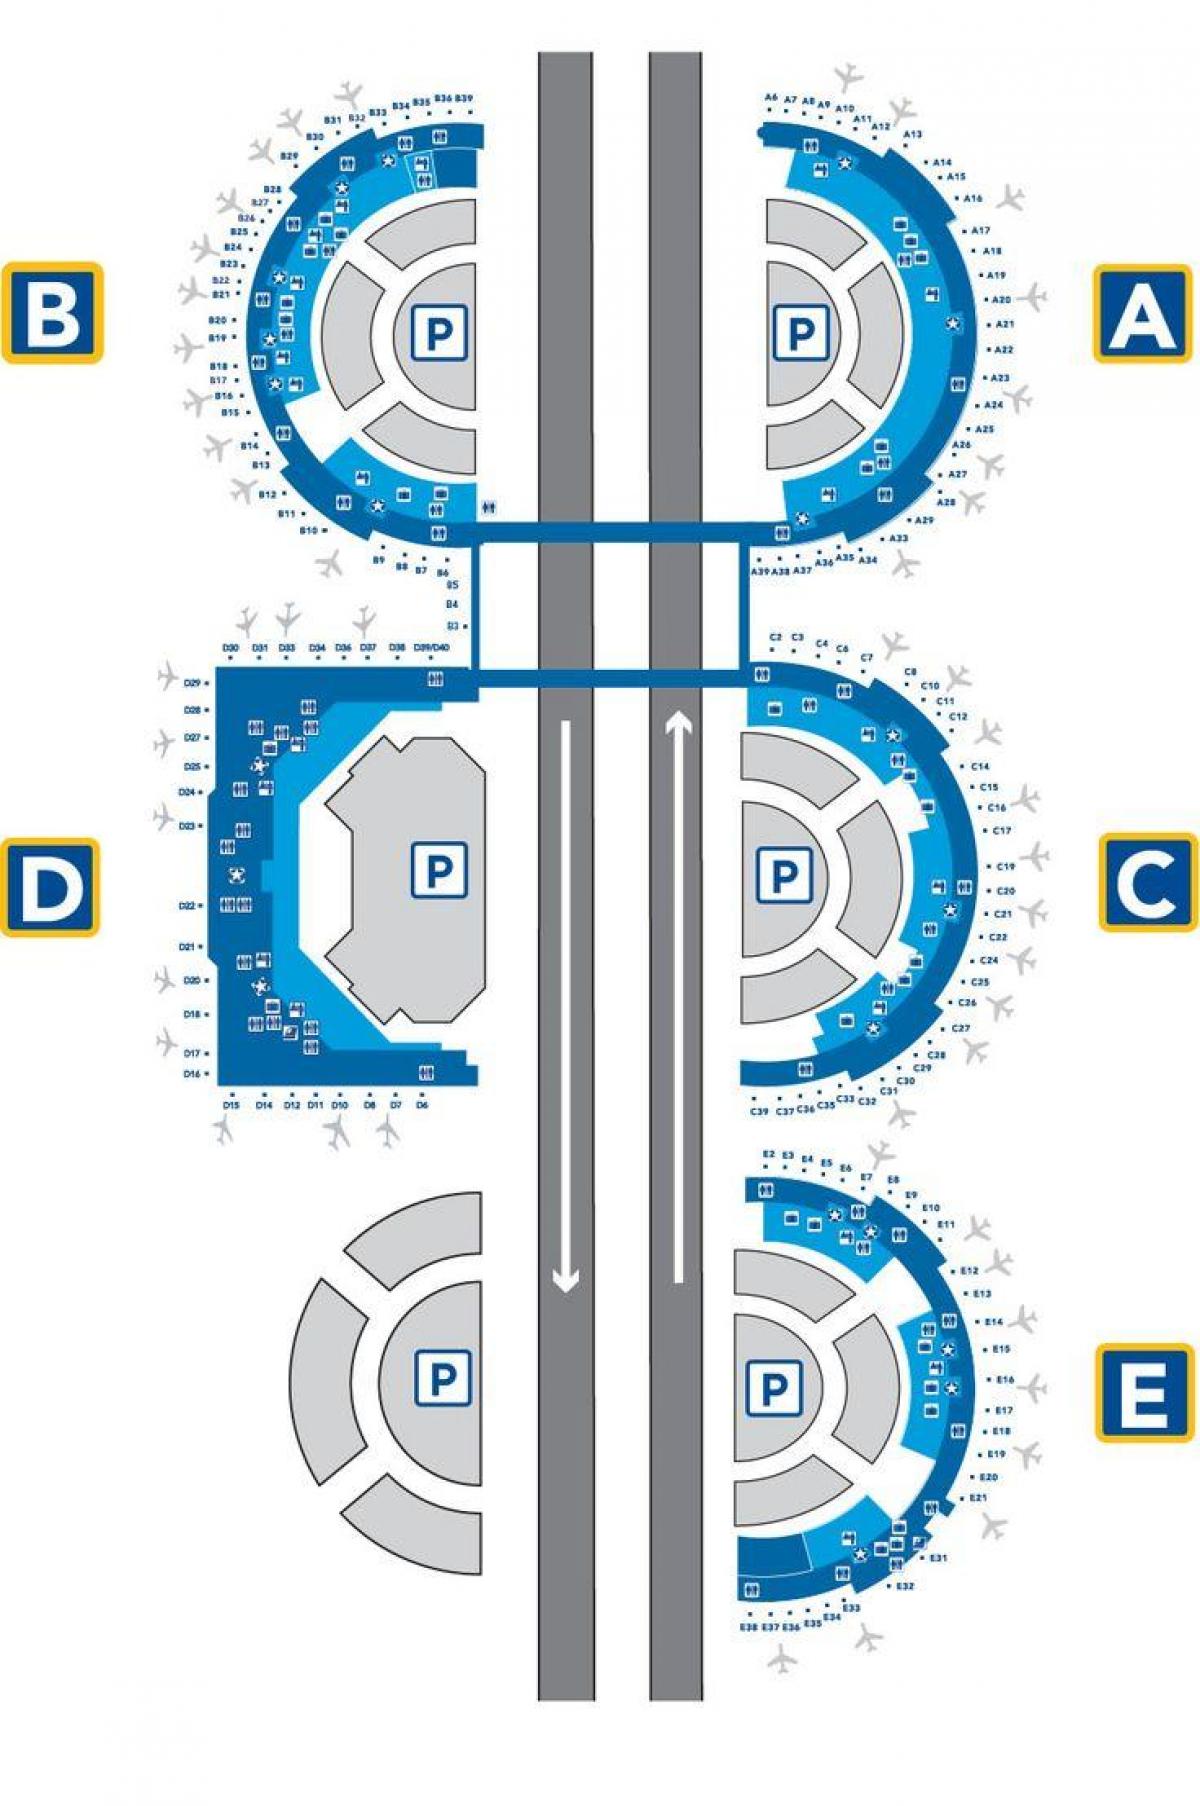 DFW terminal de l'aeroport e mapa